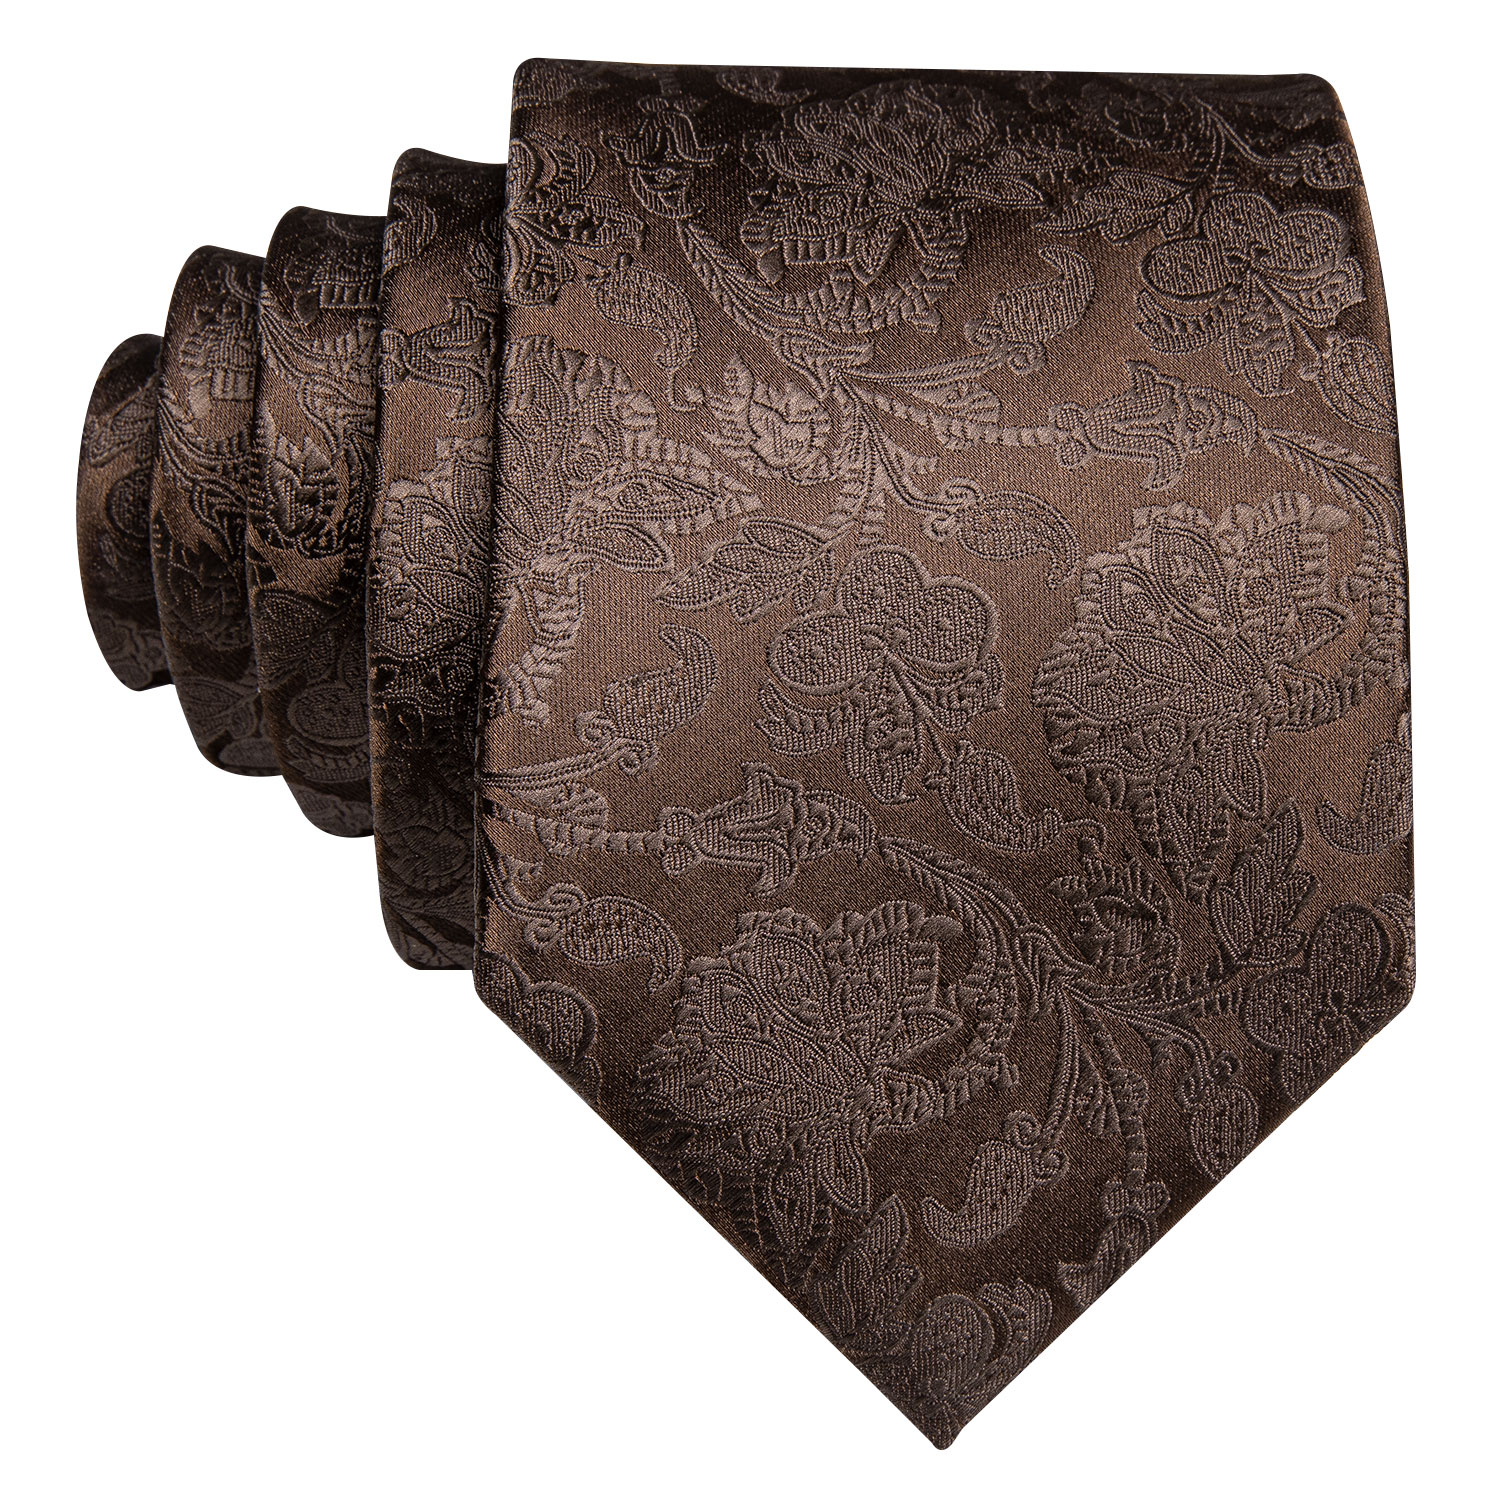 Mens Wedding Tie Brown Floral Silk Tie Hanky Set Barry.Wang Jacquard Woven Fashion Designer 9cm Neck Tie For Men Party FA-5507